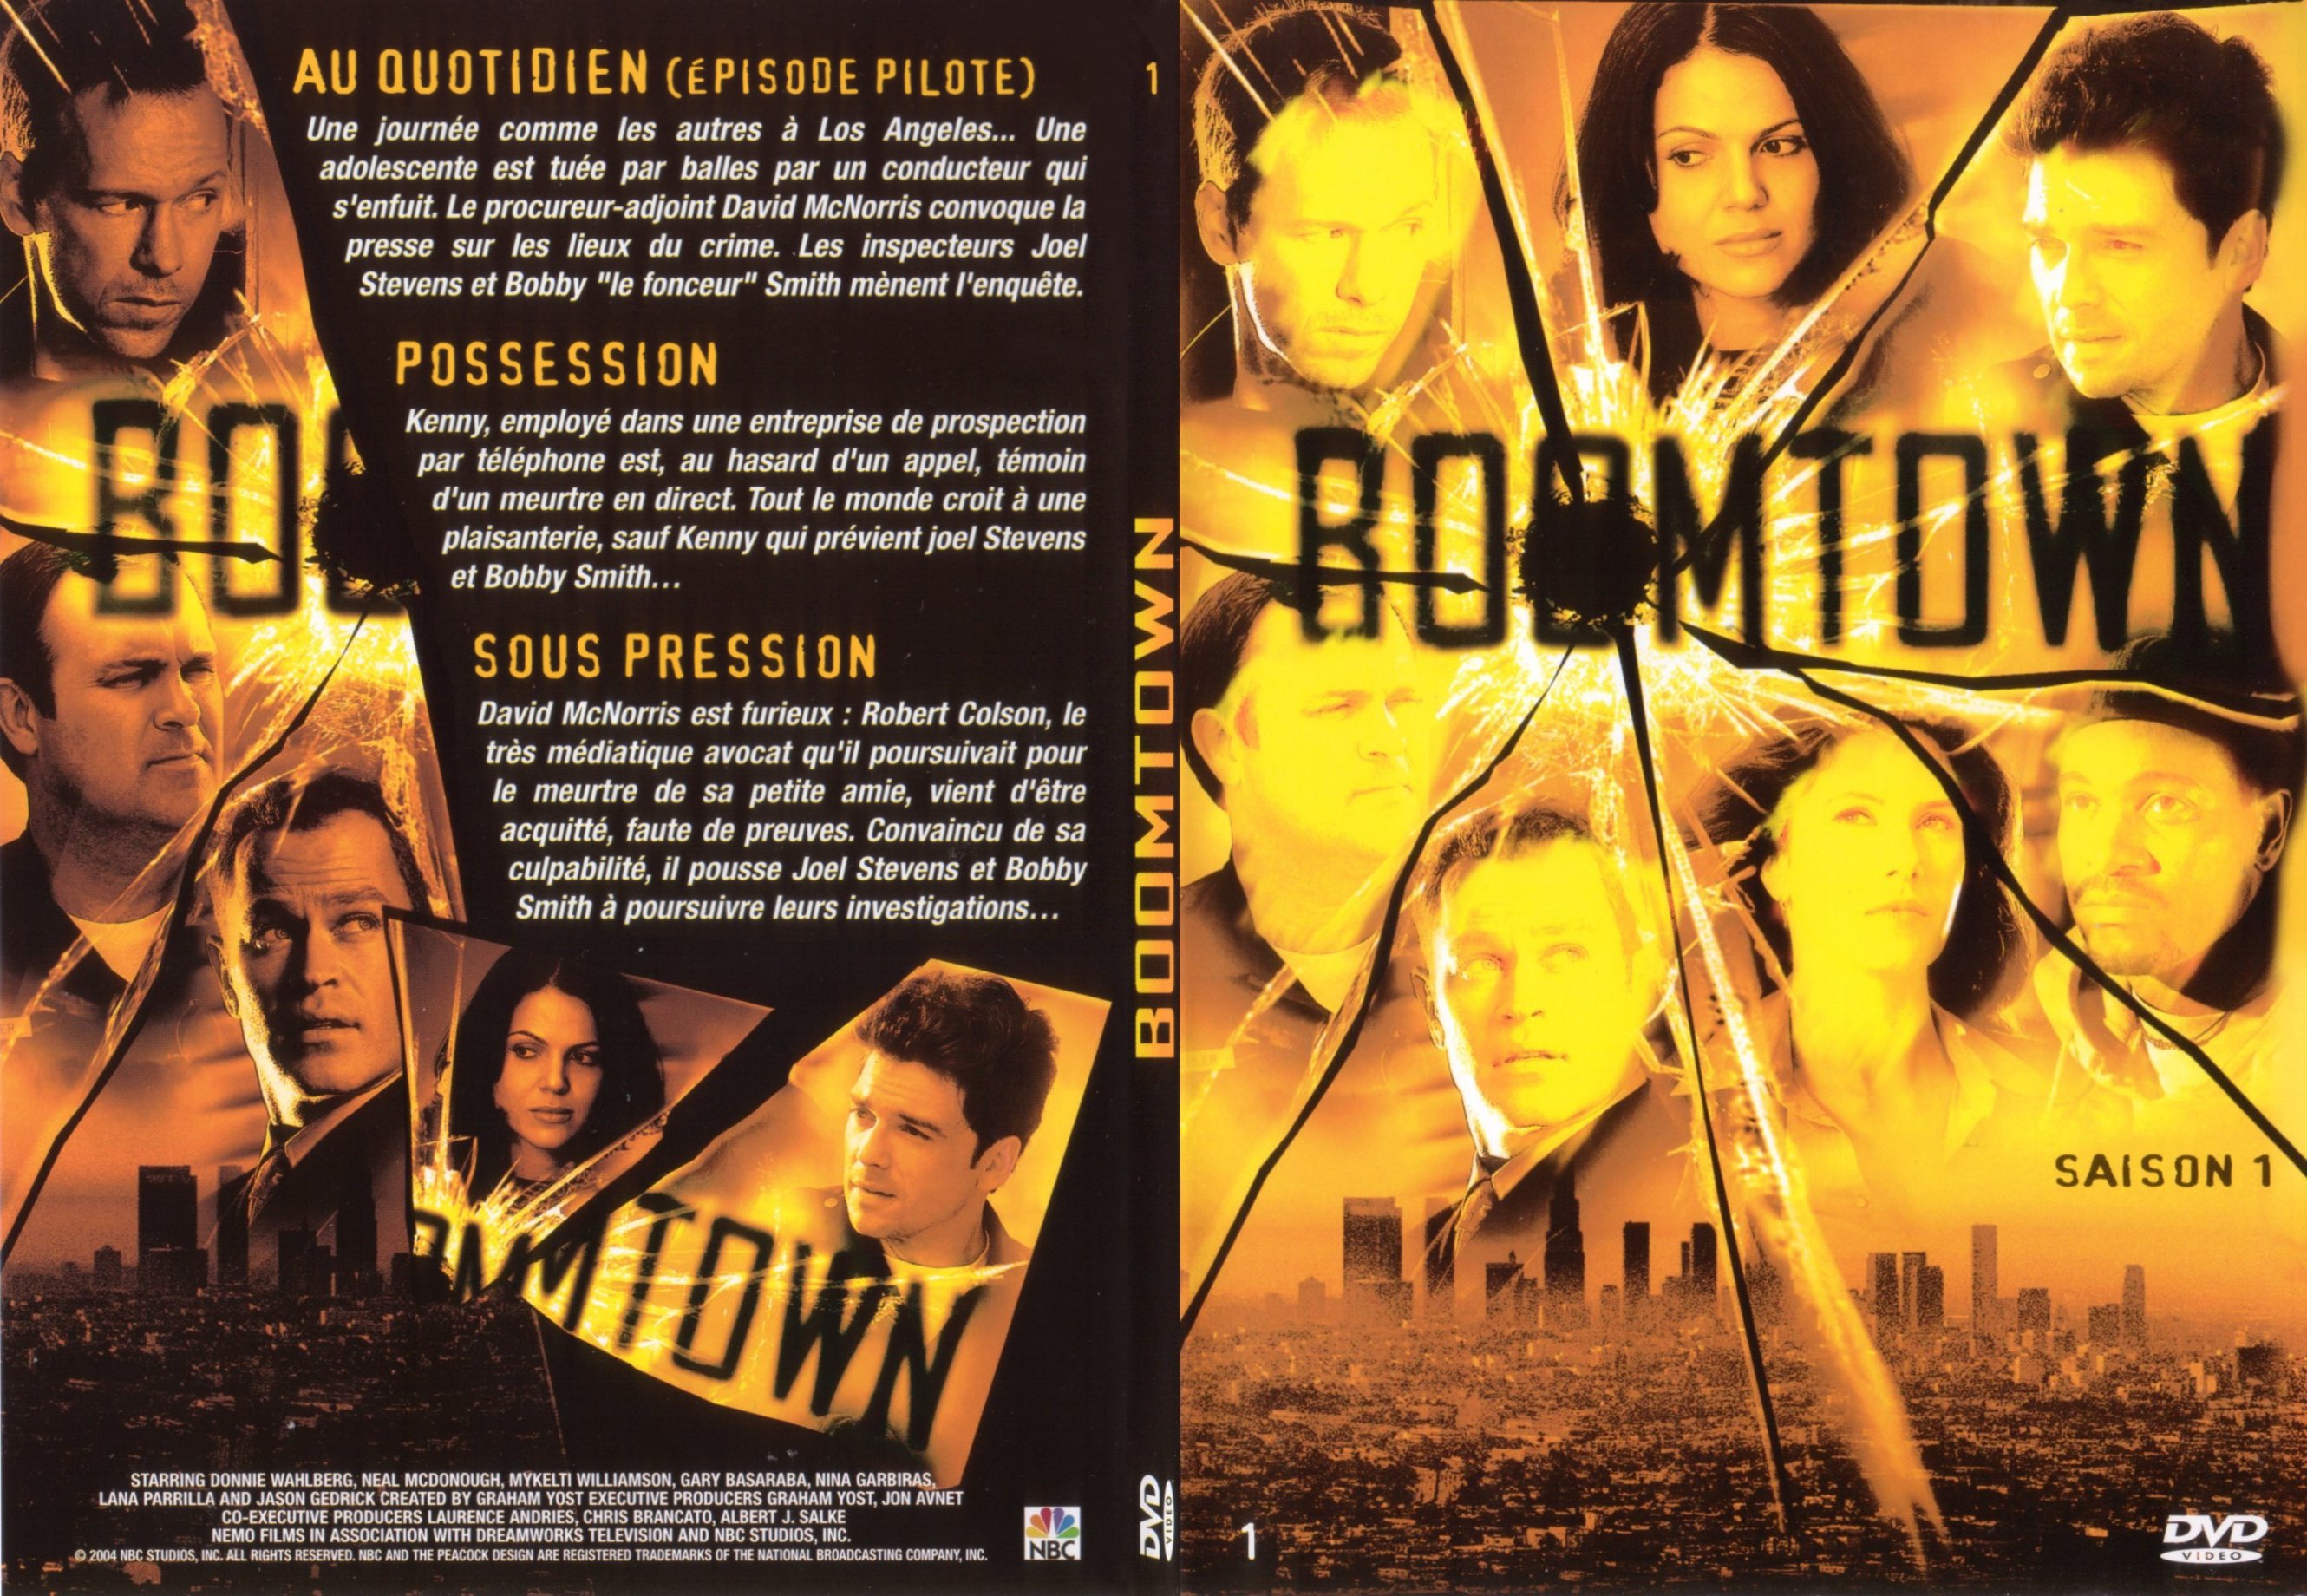 Jaquette DVD Boomtown Saison 1 DVD 1